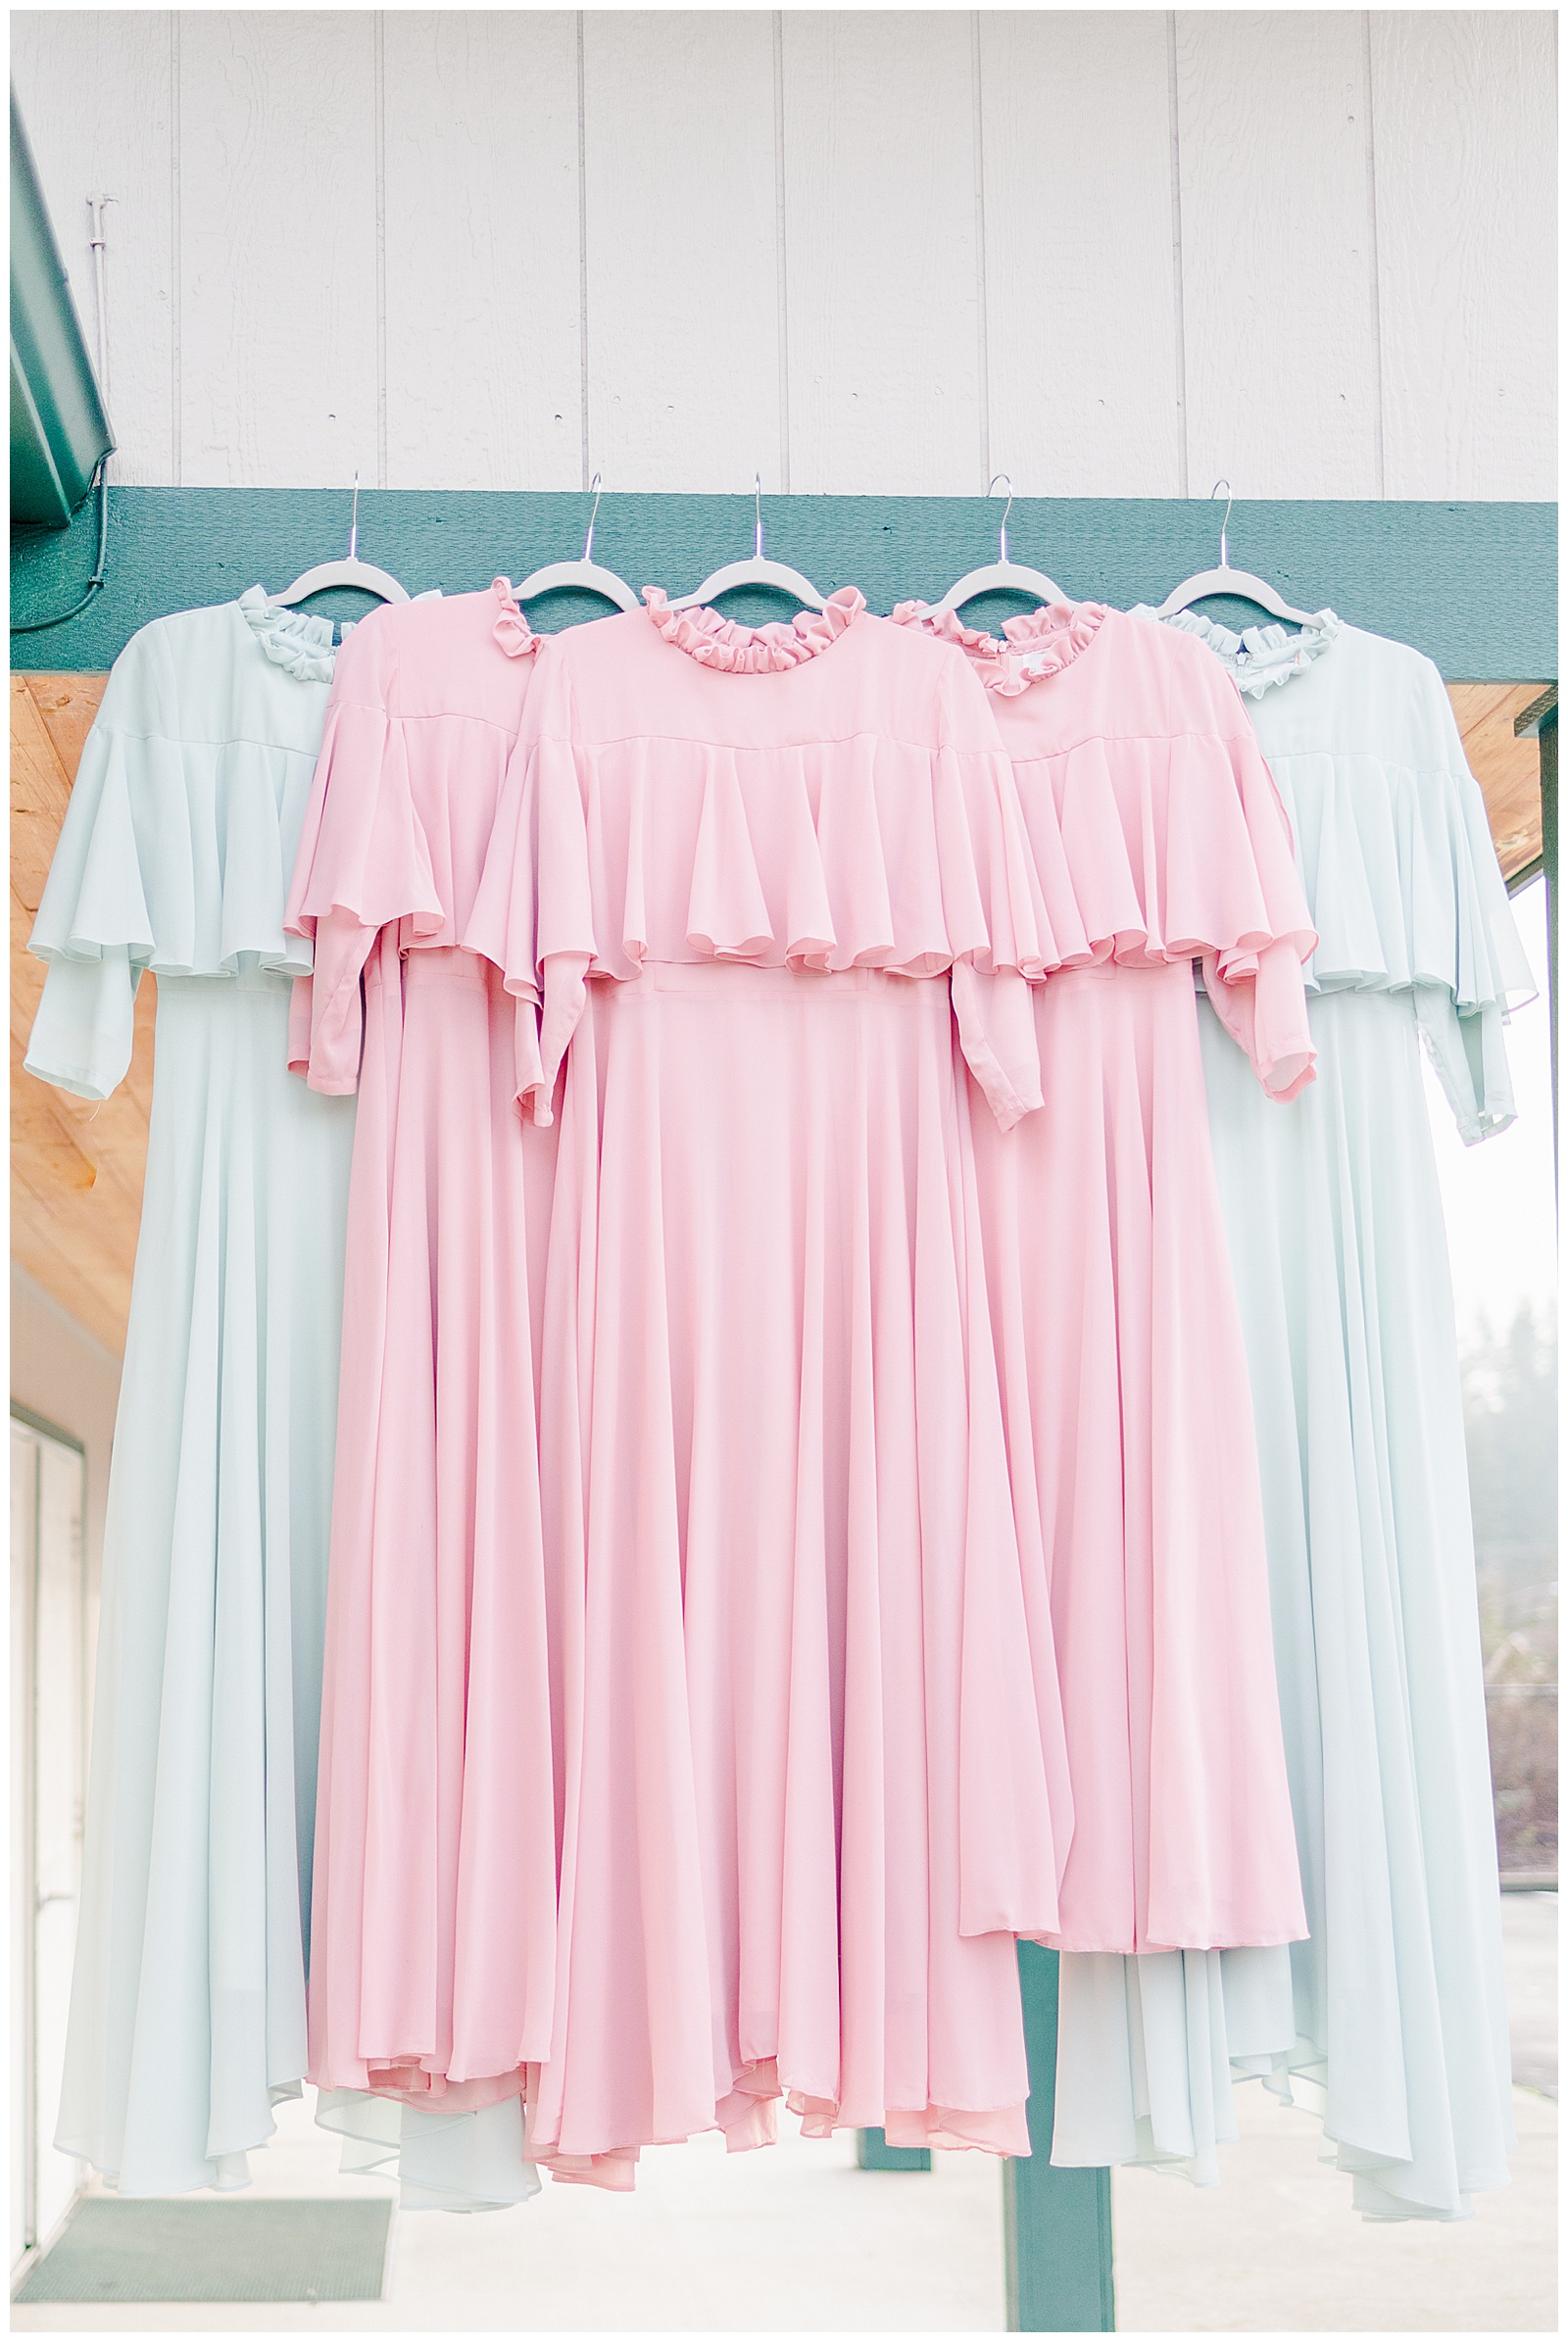 Teal and Pink Bridesmaid dresses